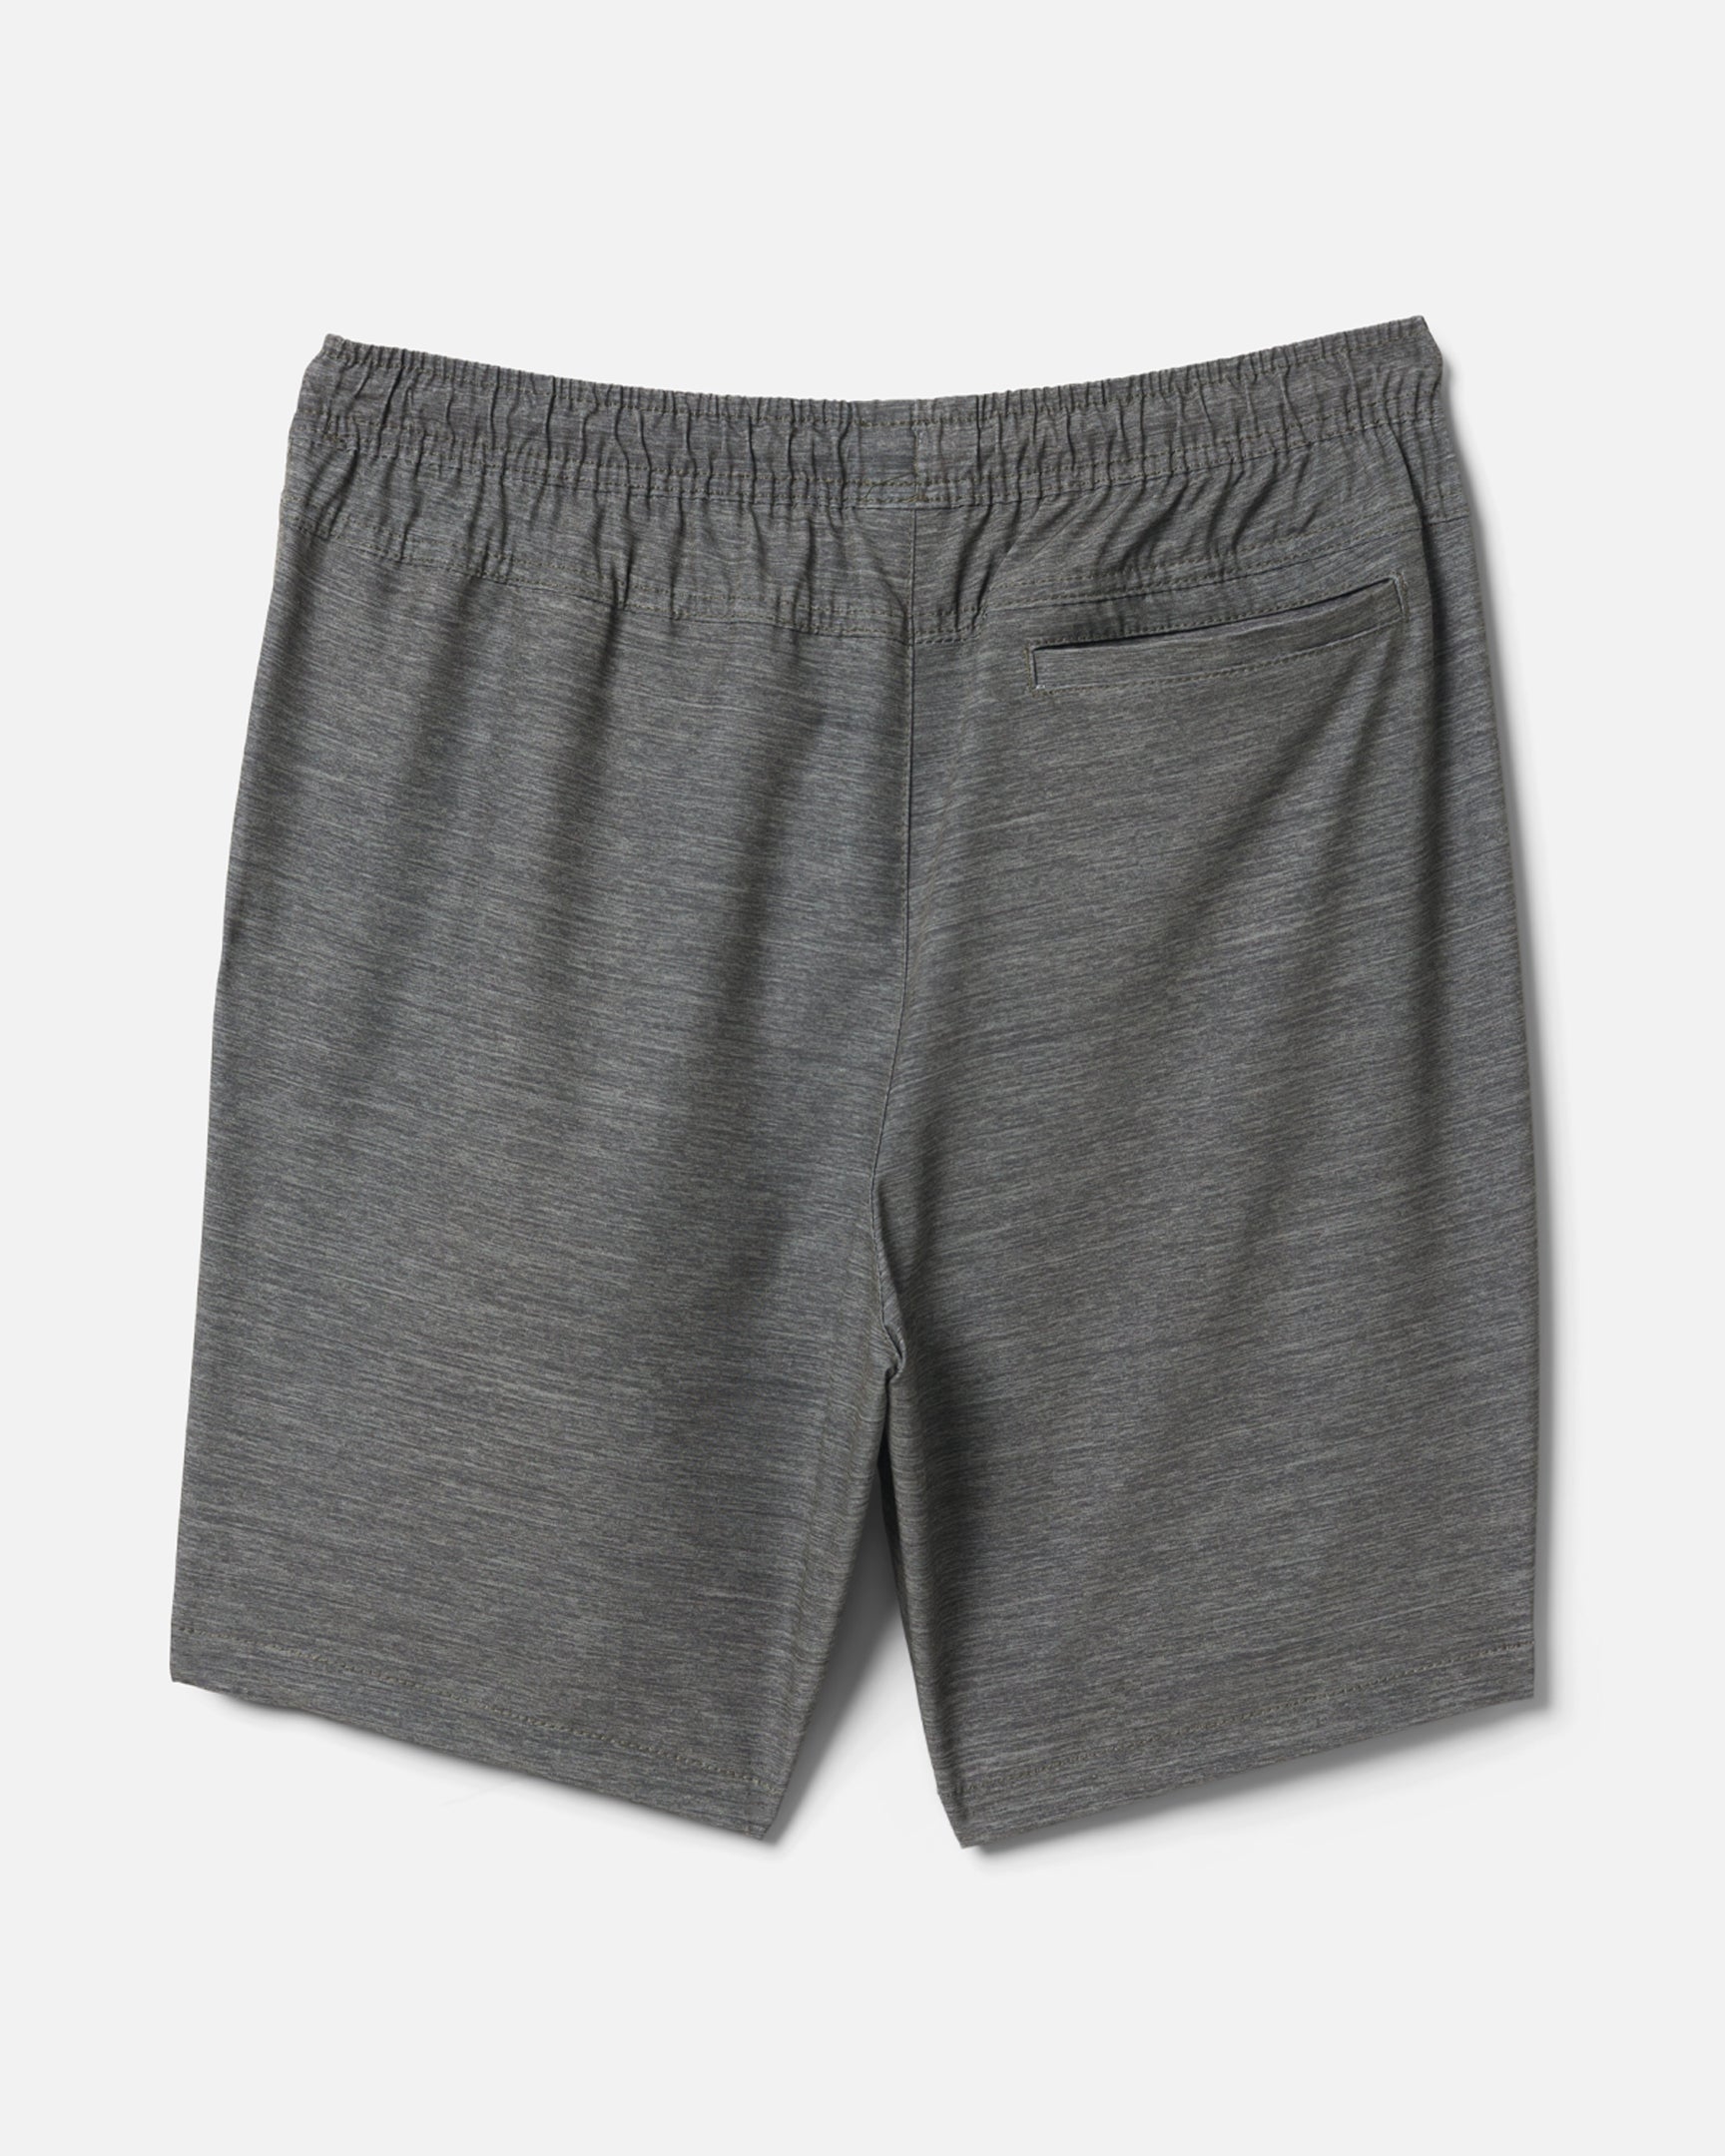 Black Cactus® Reversible Shorts 1.0 - Black & Light Grey